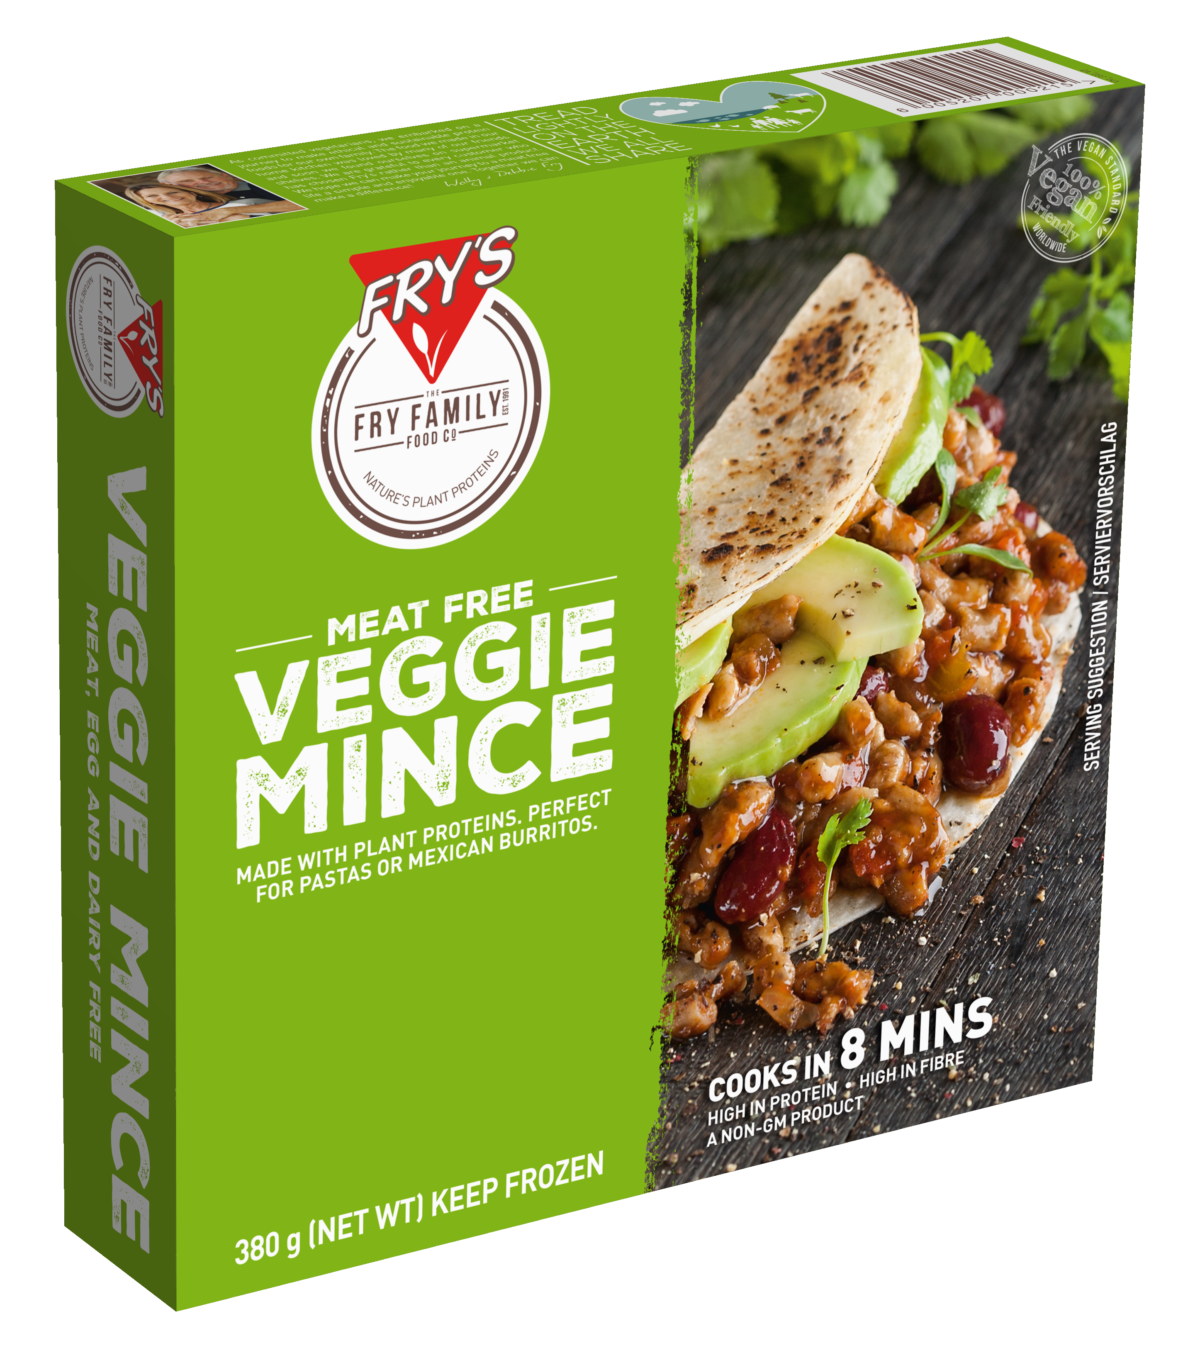 Meat free veggie mince 3D box